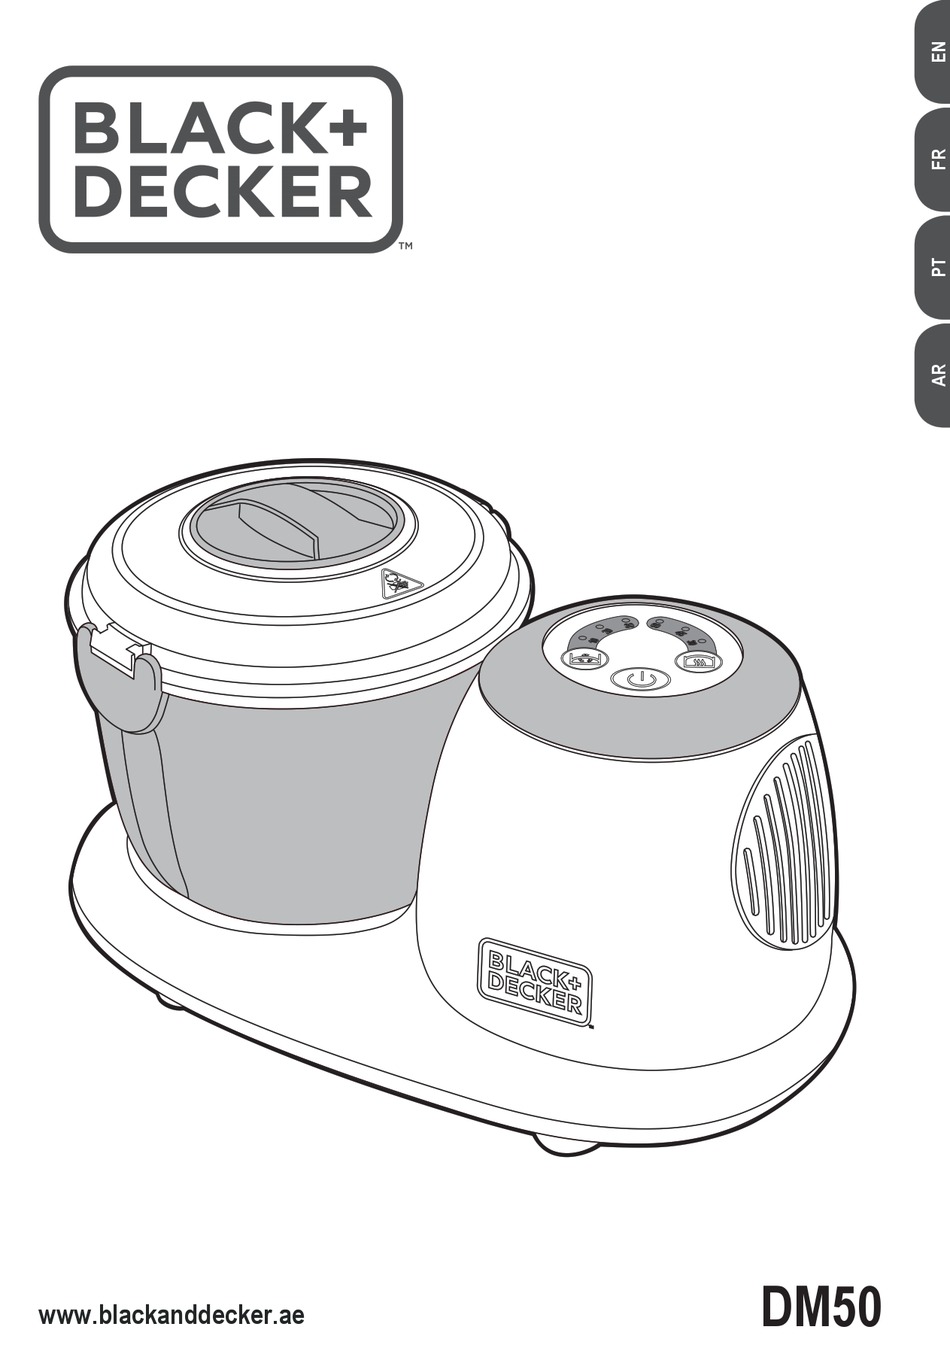 BLACK DECKER MCD900BBD 7 Quarts Digital Multicooker User Manual